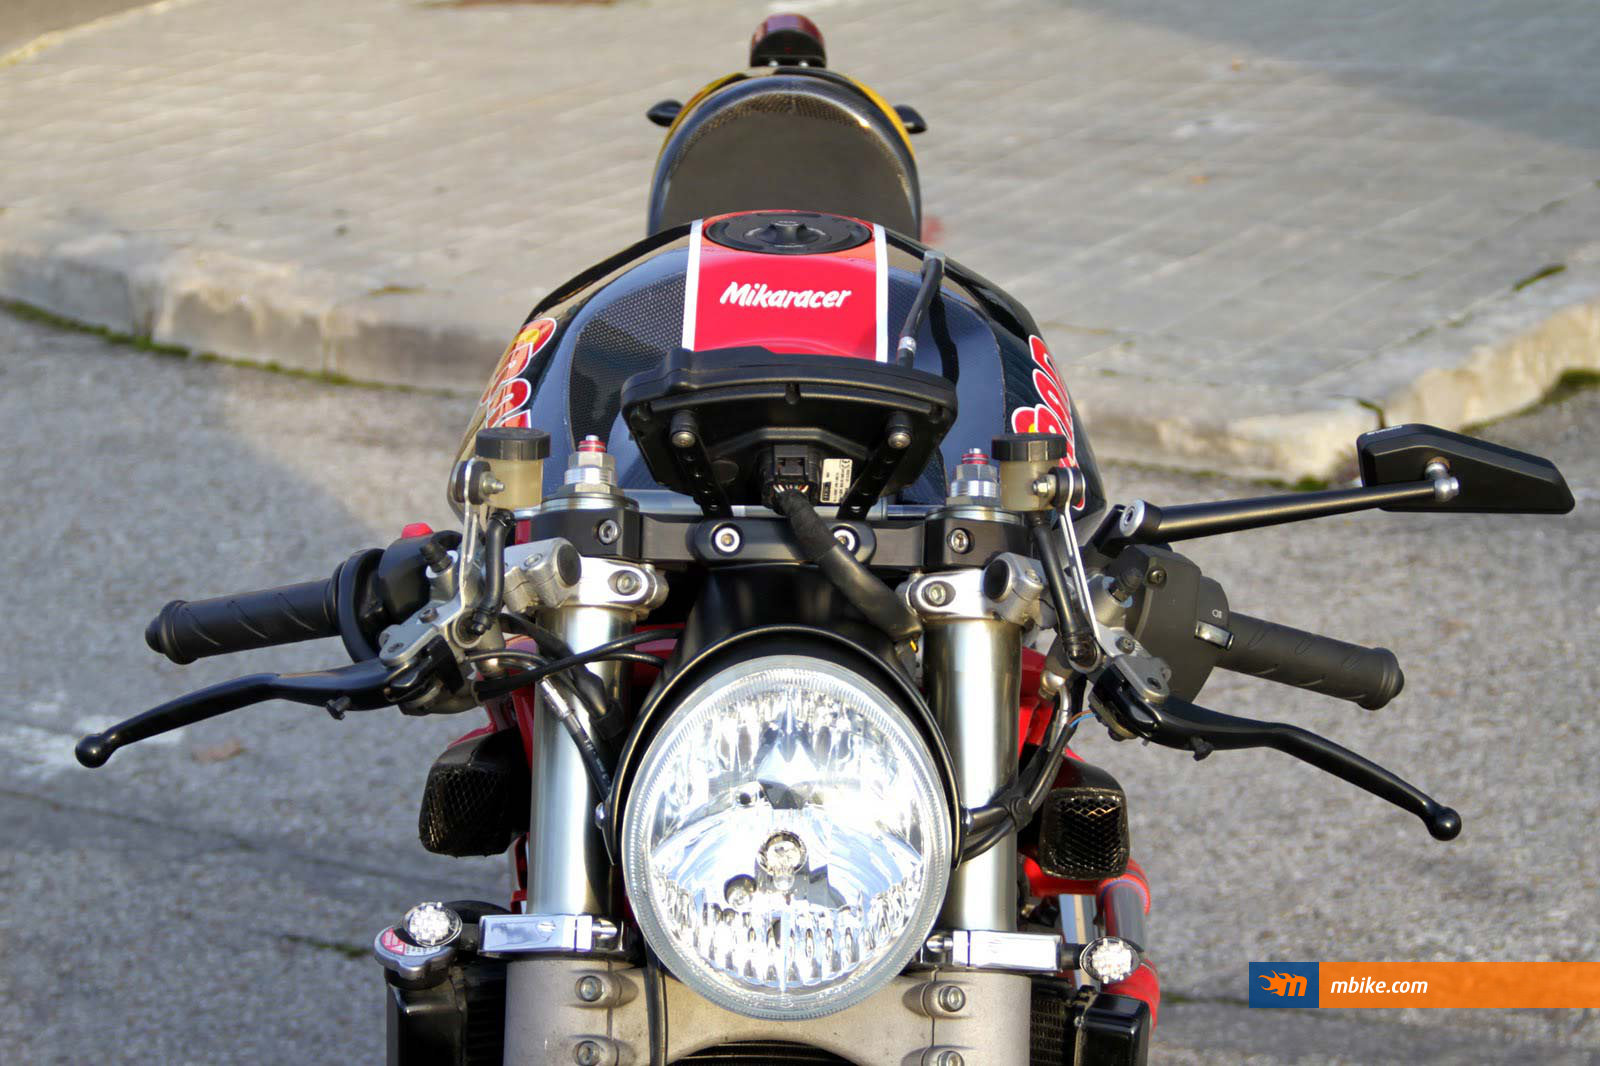 Radical Ducati Mikaracer 19